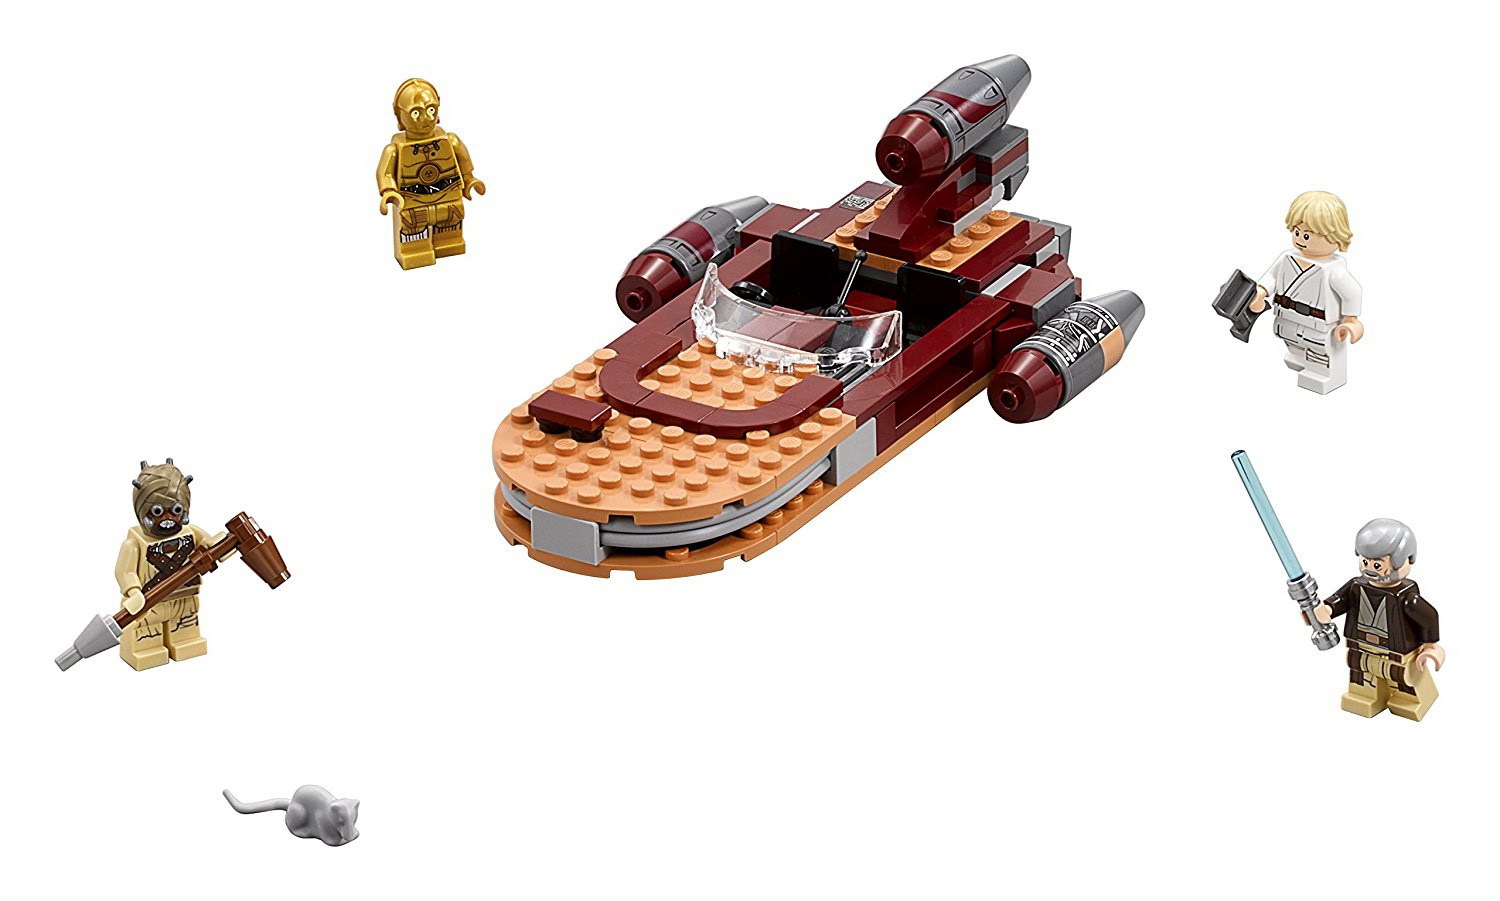 LEGO Star Wars 75173 - Luke's Landspeeder